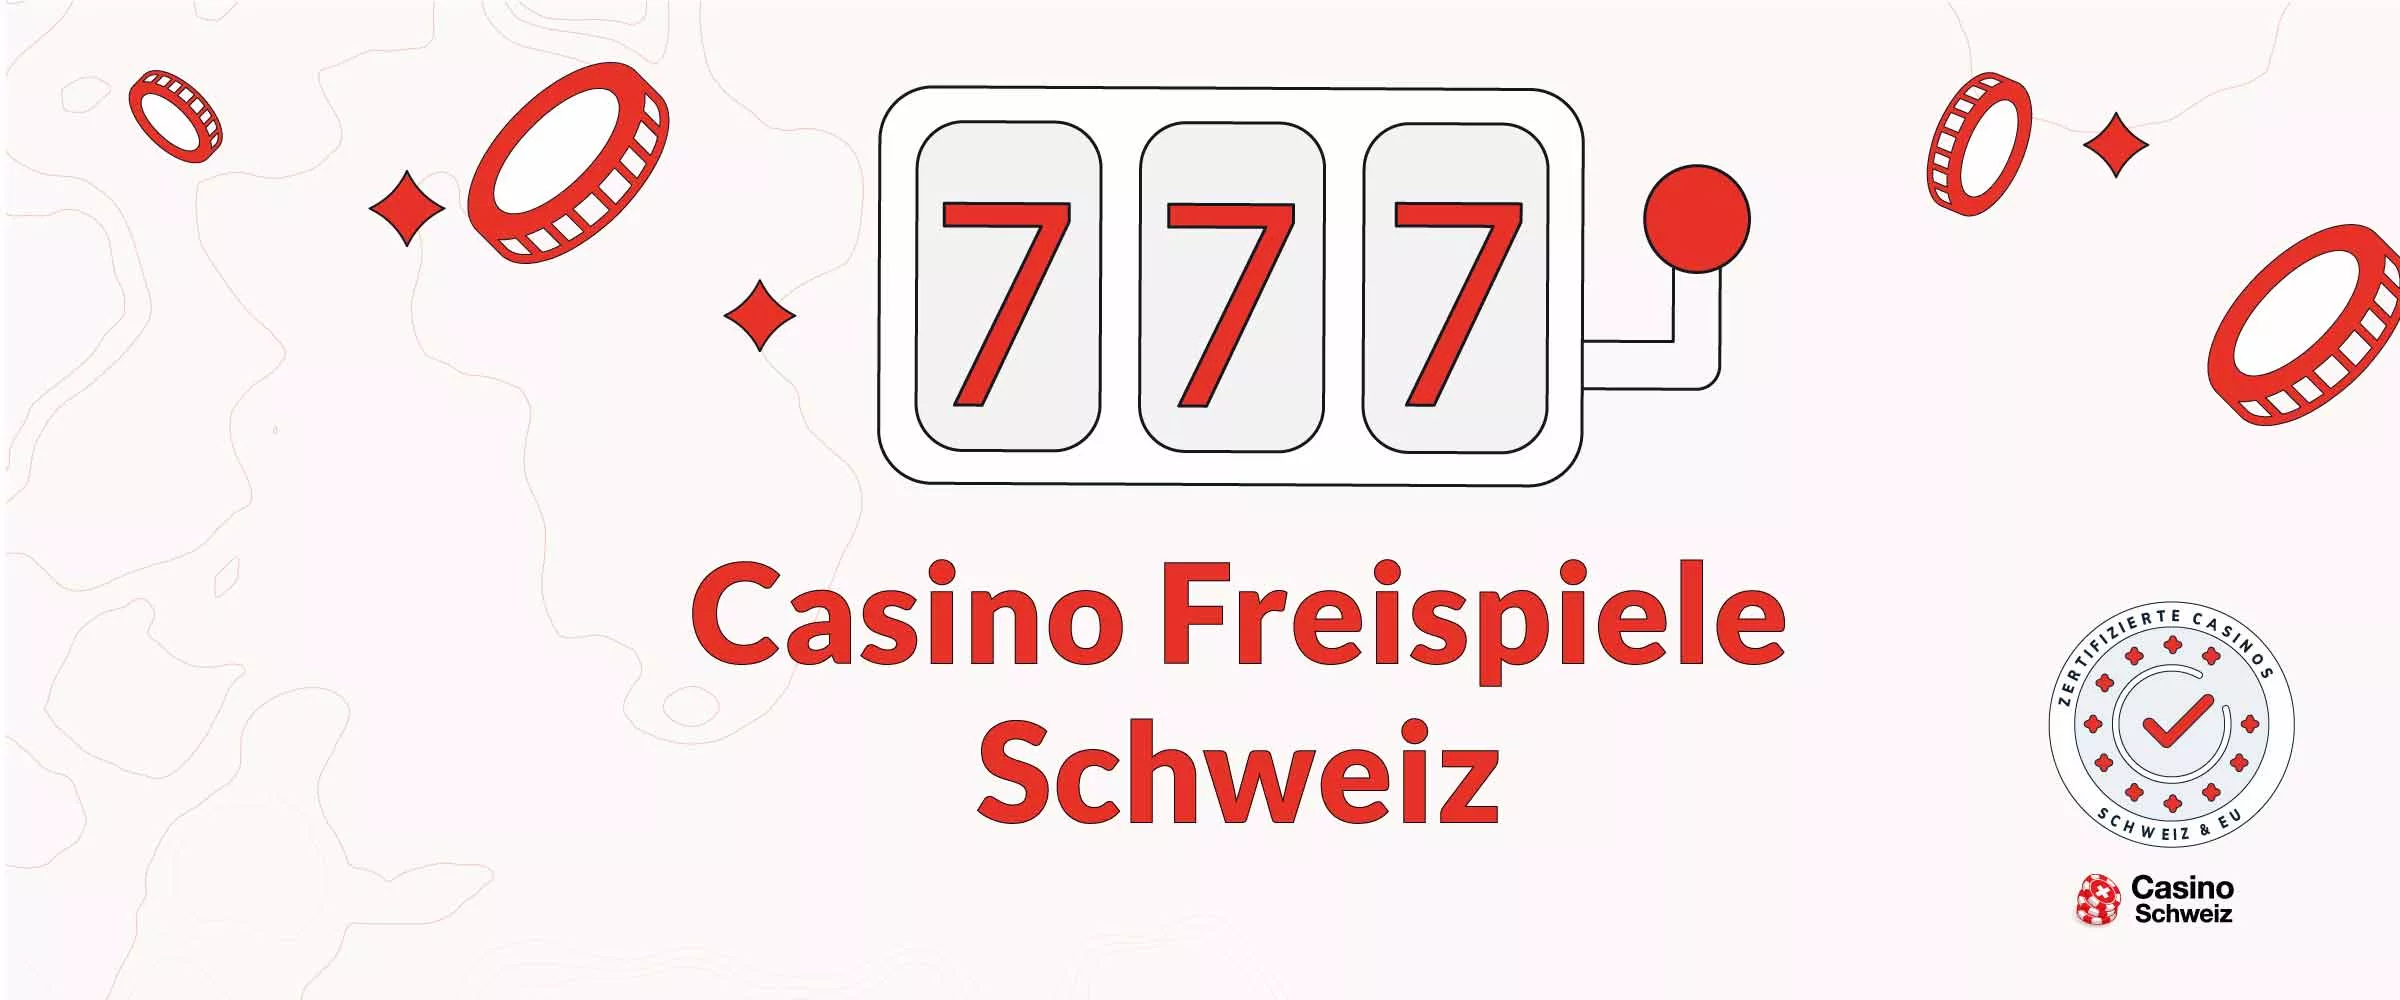 Casino Freispiele Schweiz